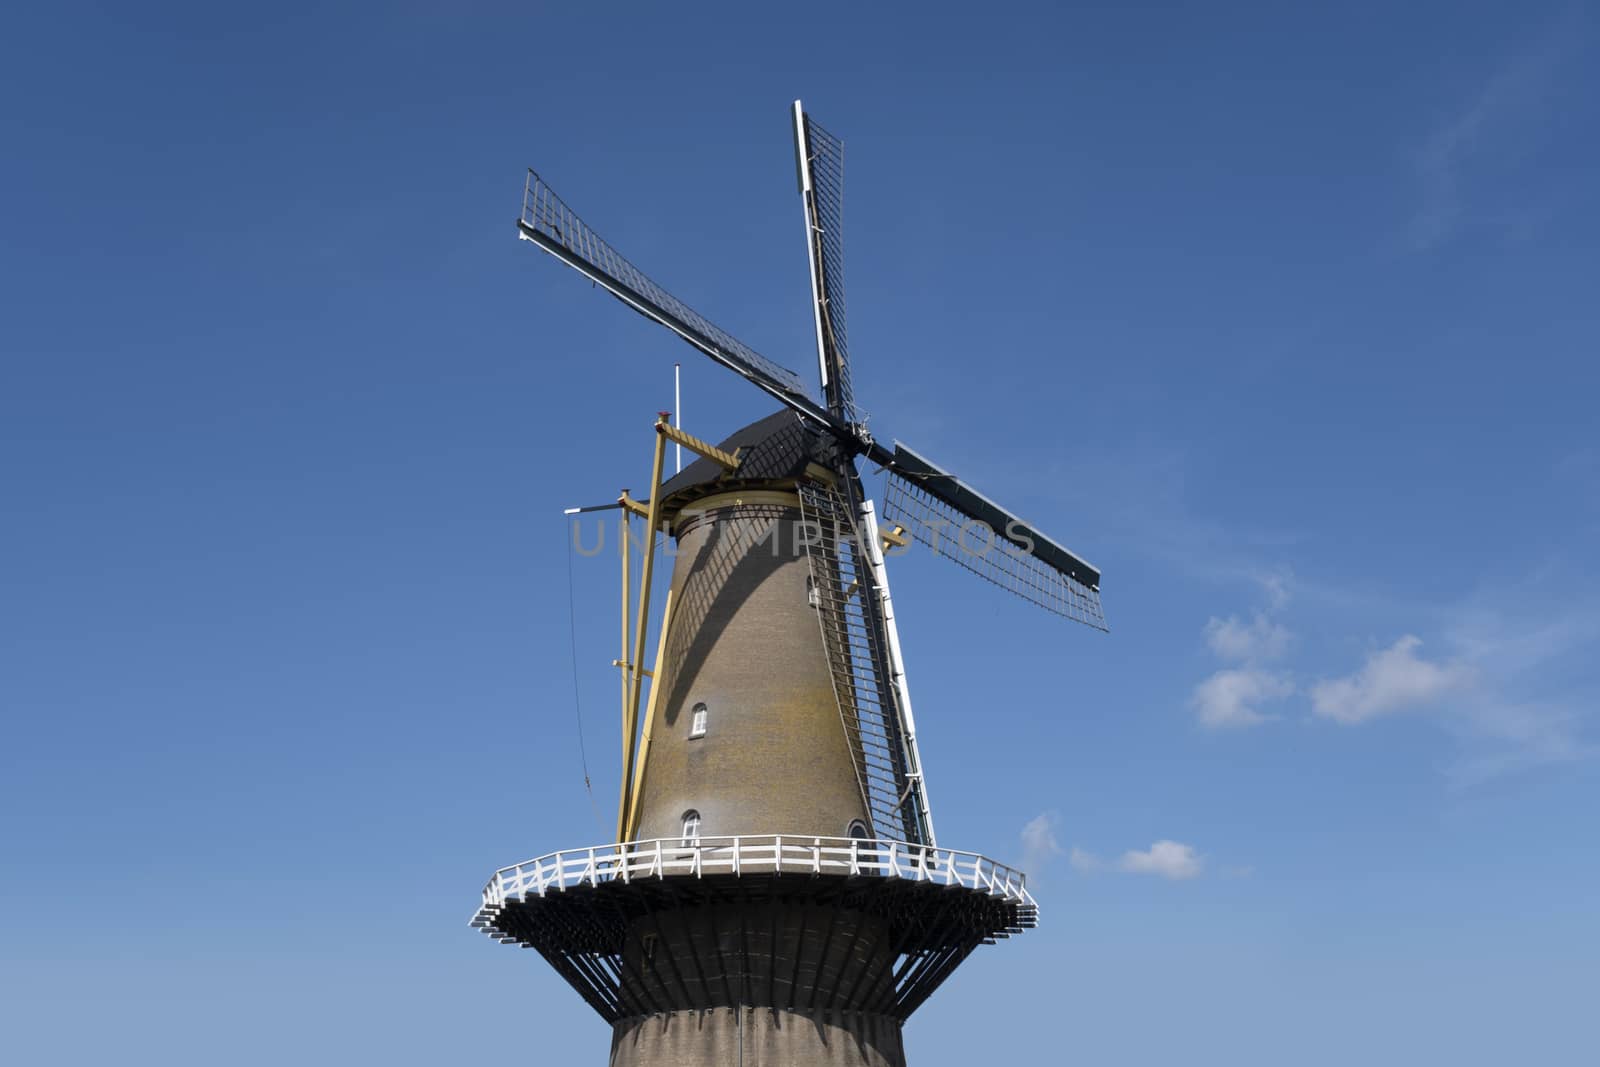 beautiful windmill landscape at kinderdijk in the netherlands by Tjeerdkruse